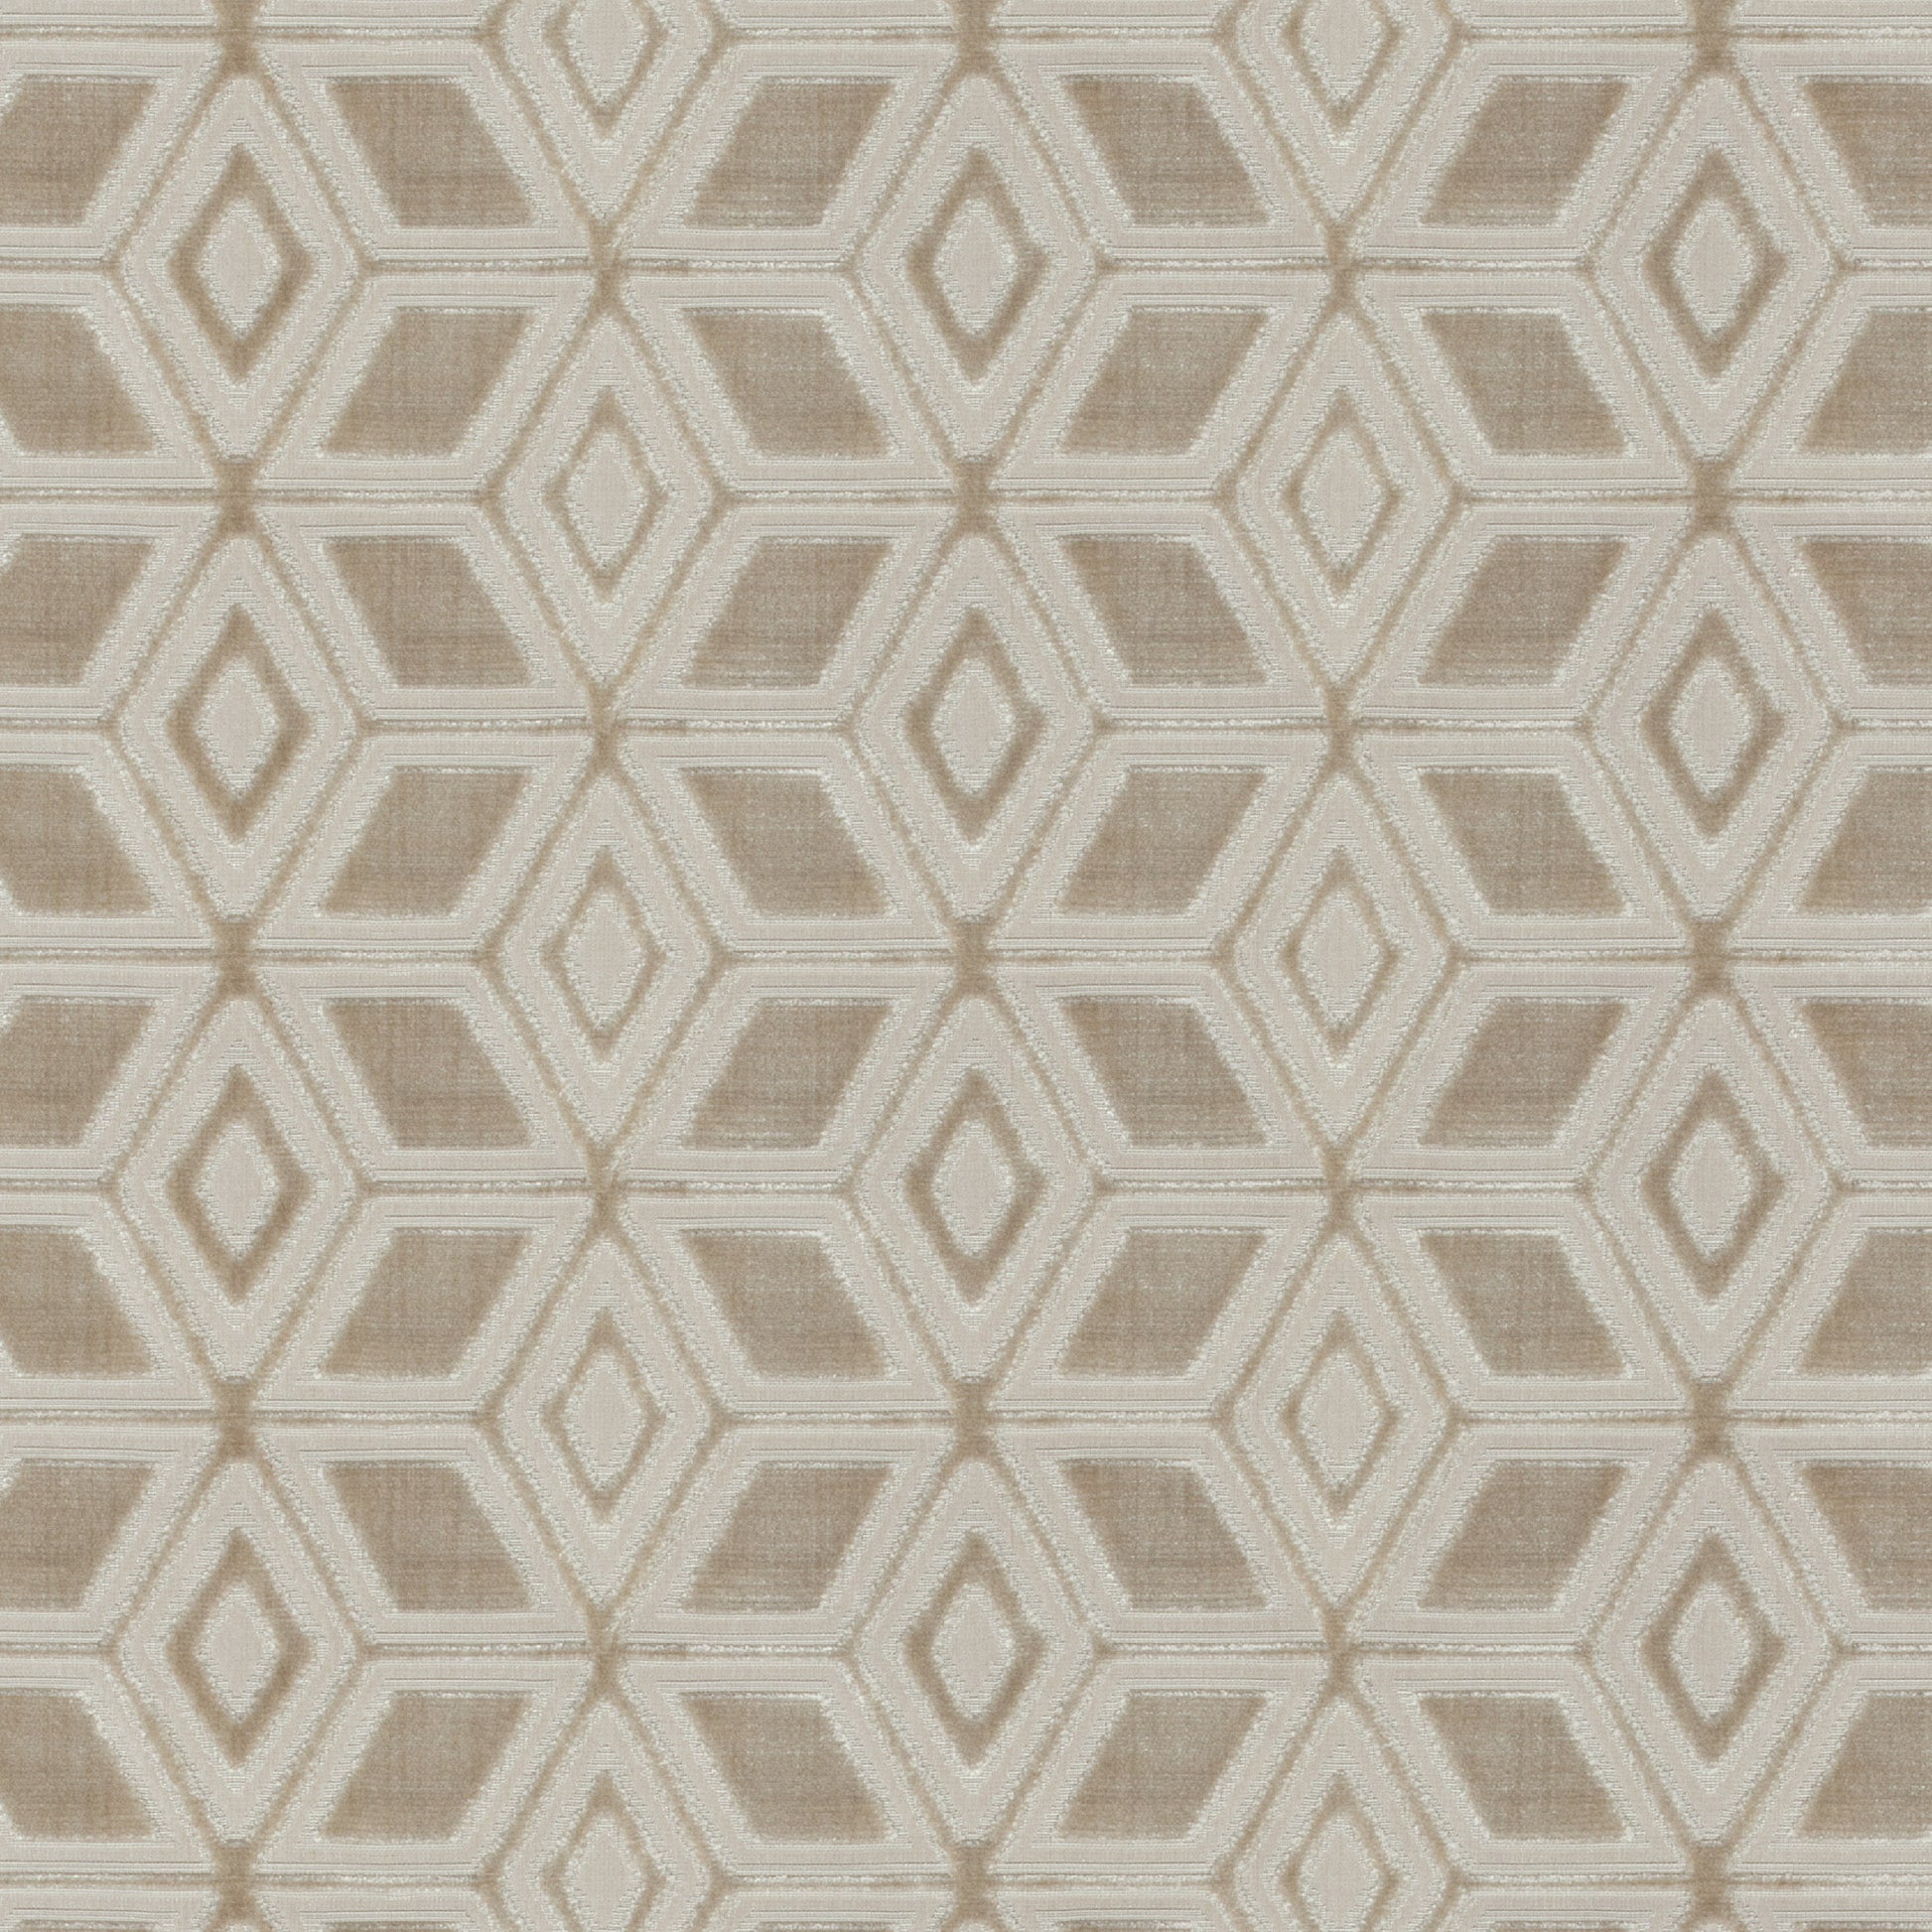 Purchase  Ann French Fabric Item AW72987  pattern name  Jardin Maze Velvet